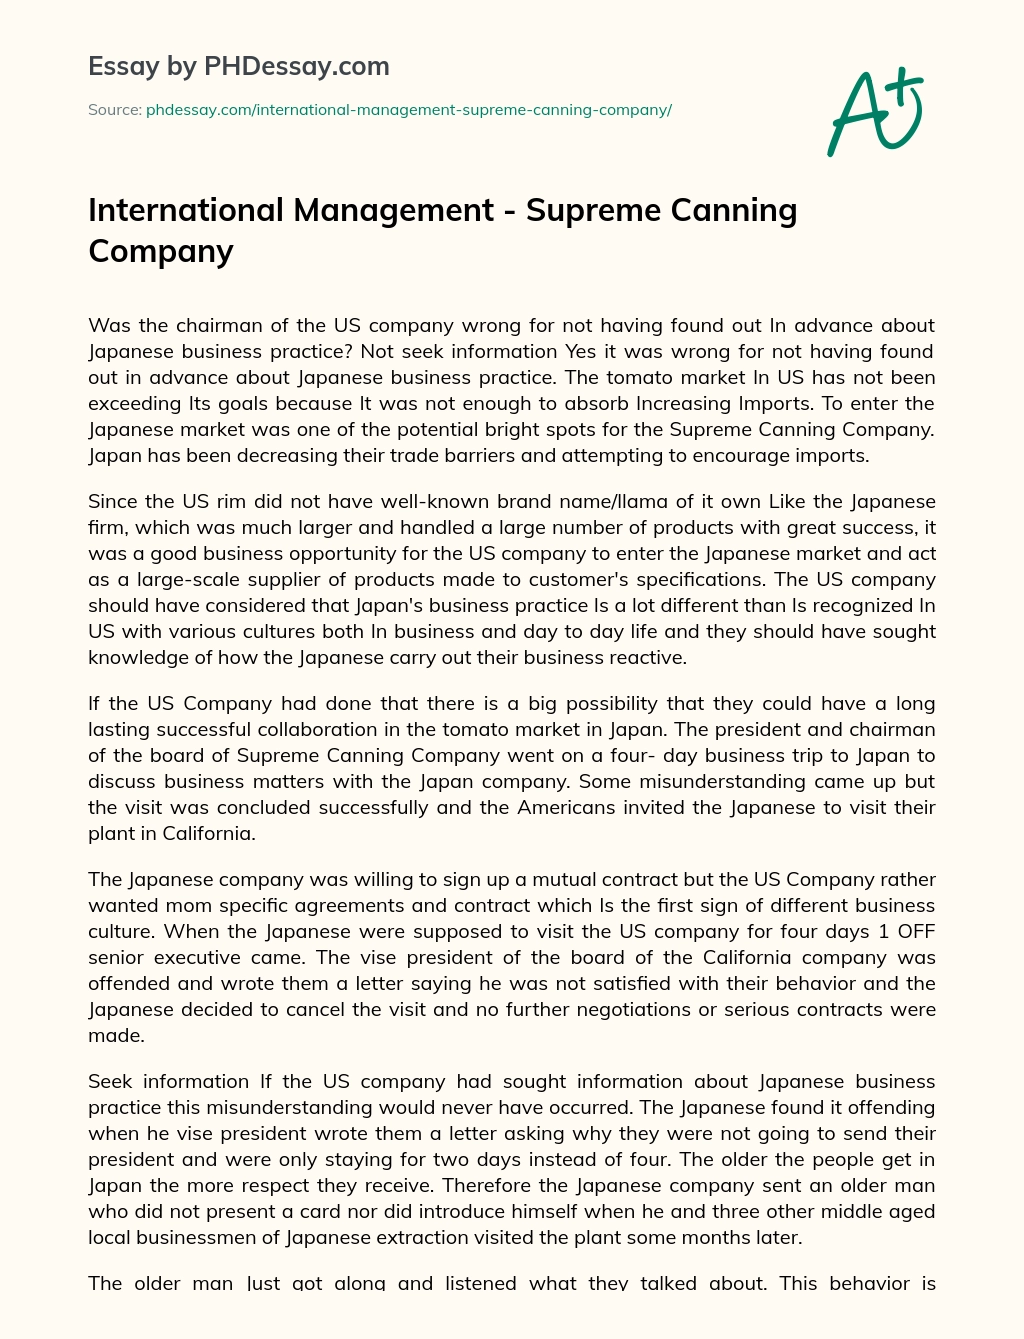 International Management – Supreme Canning Company essay